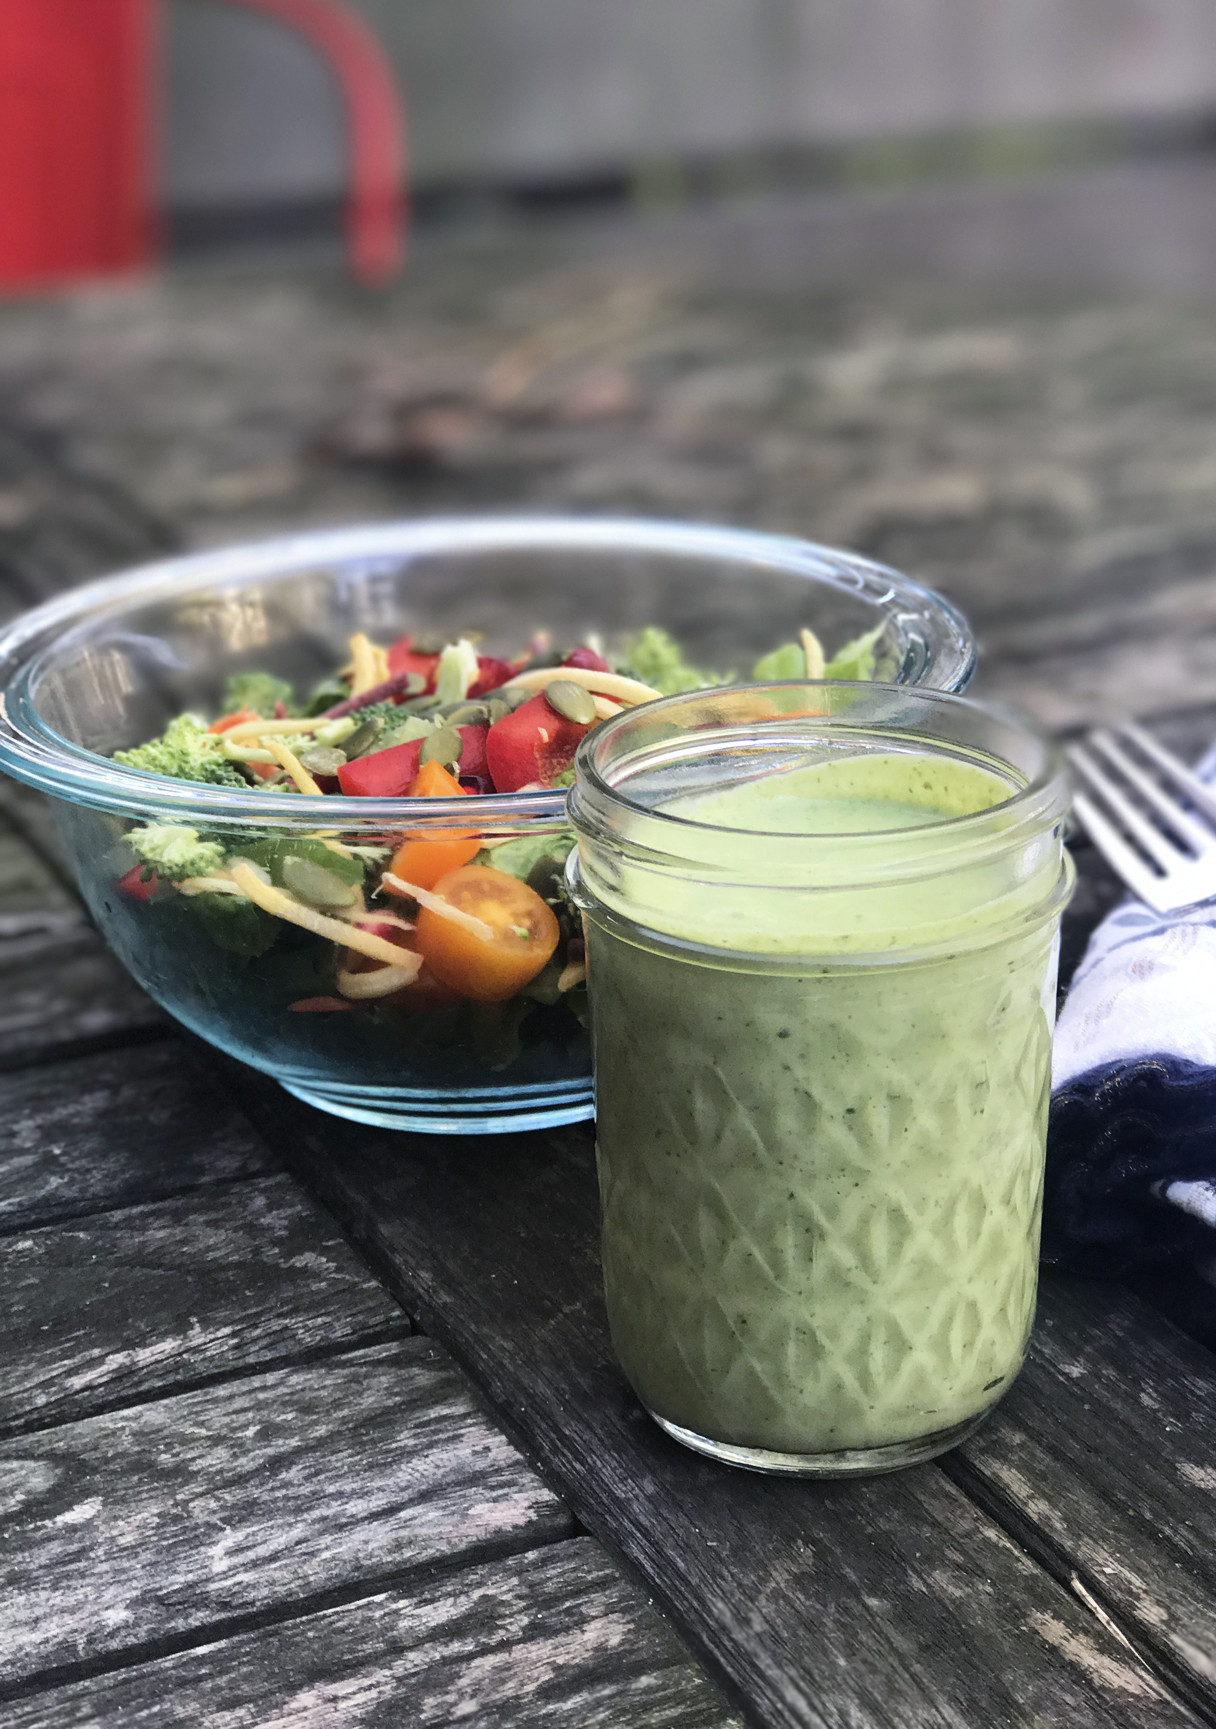 Vegan Salad Dressing Recipes Awesome A Creamy Vegan Green Goddess Salad Dressing Recipe You Ll